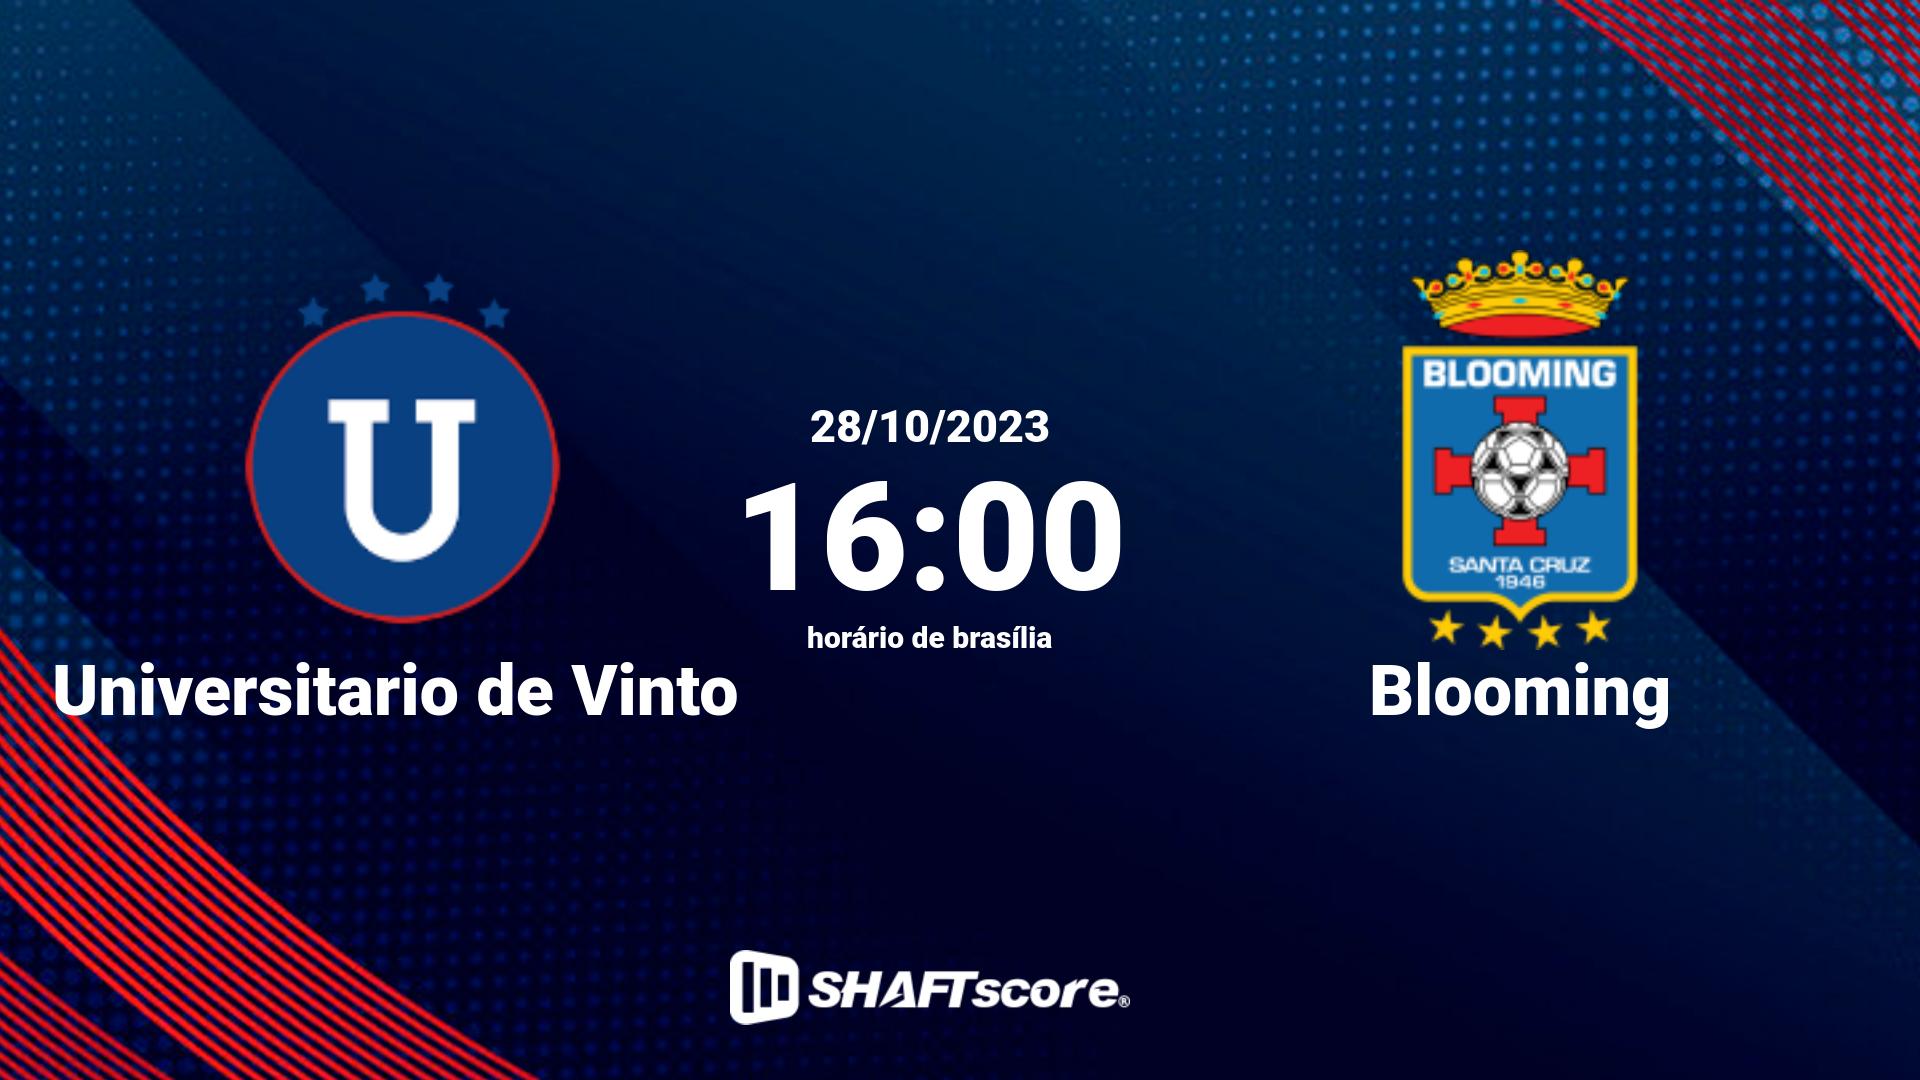 Estatísticas do jogo Universitario de Vinto vs Blooming 28.10 16:00